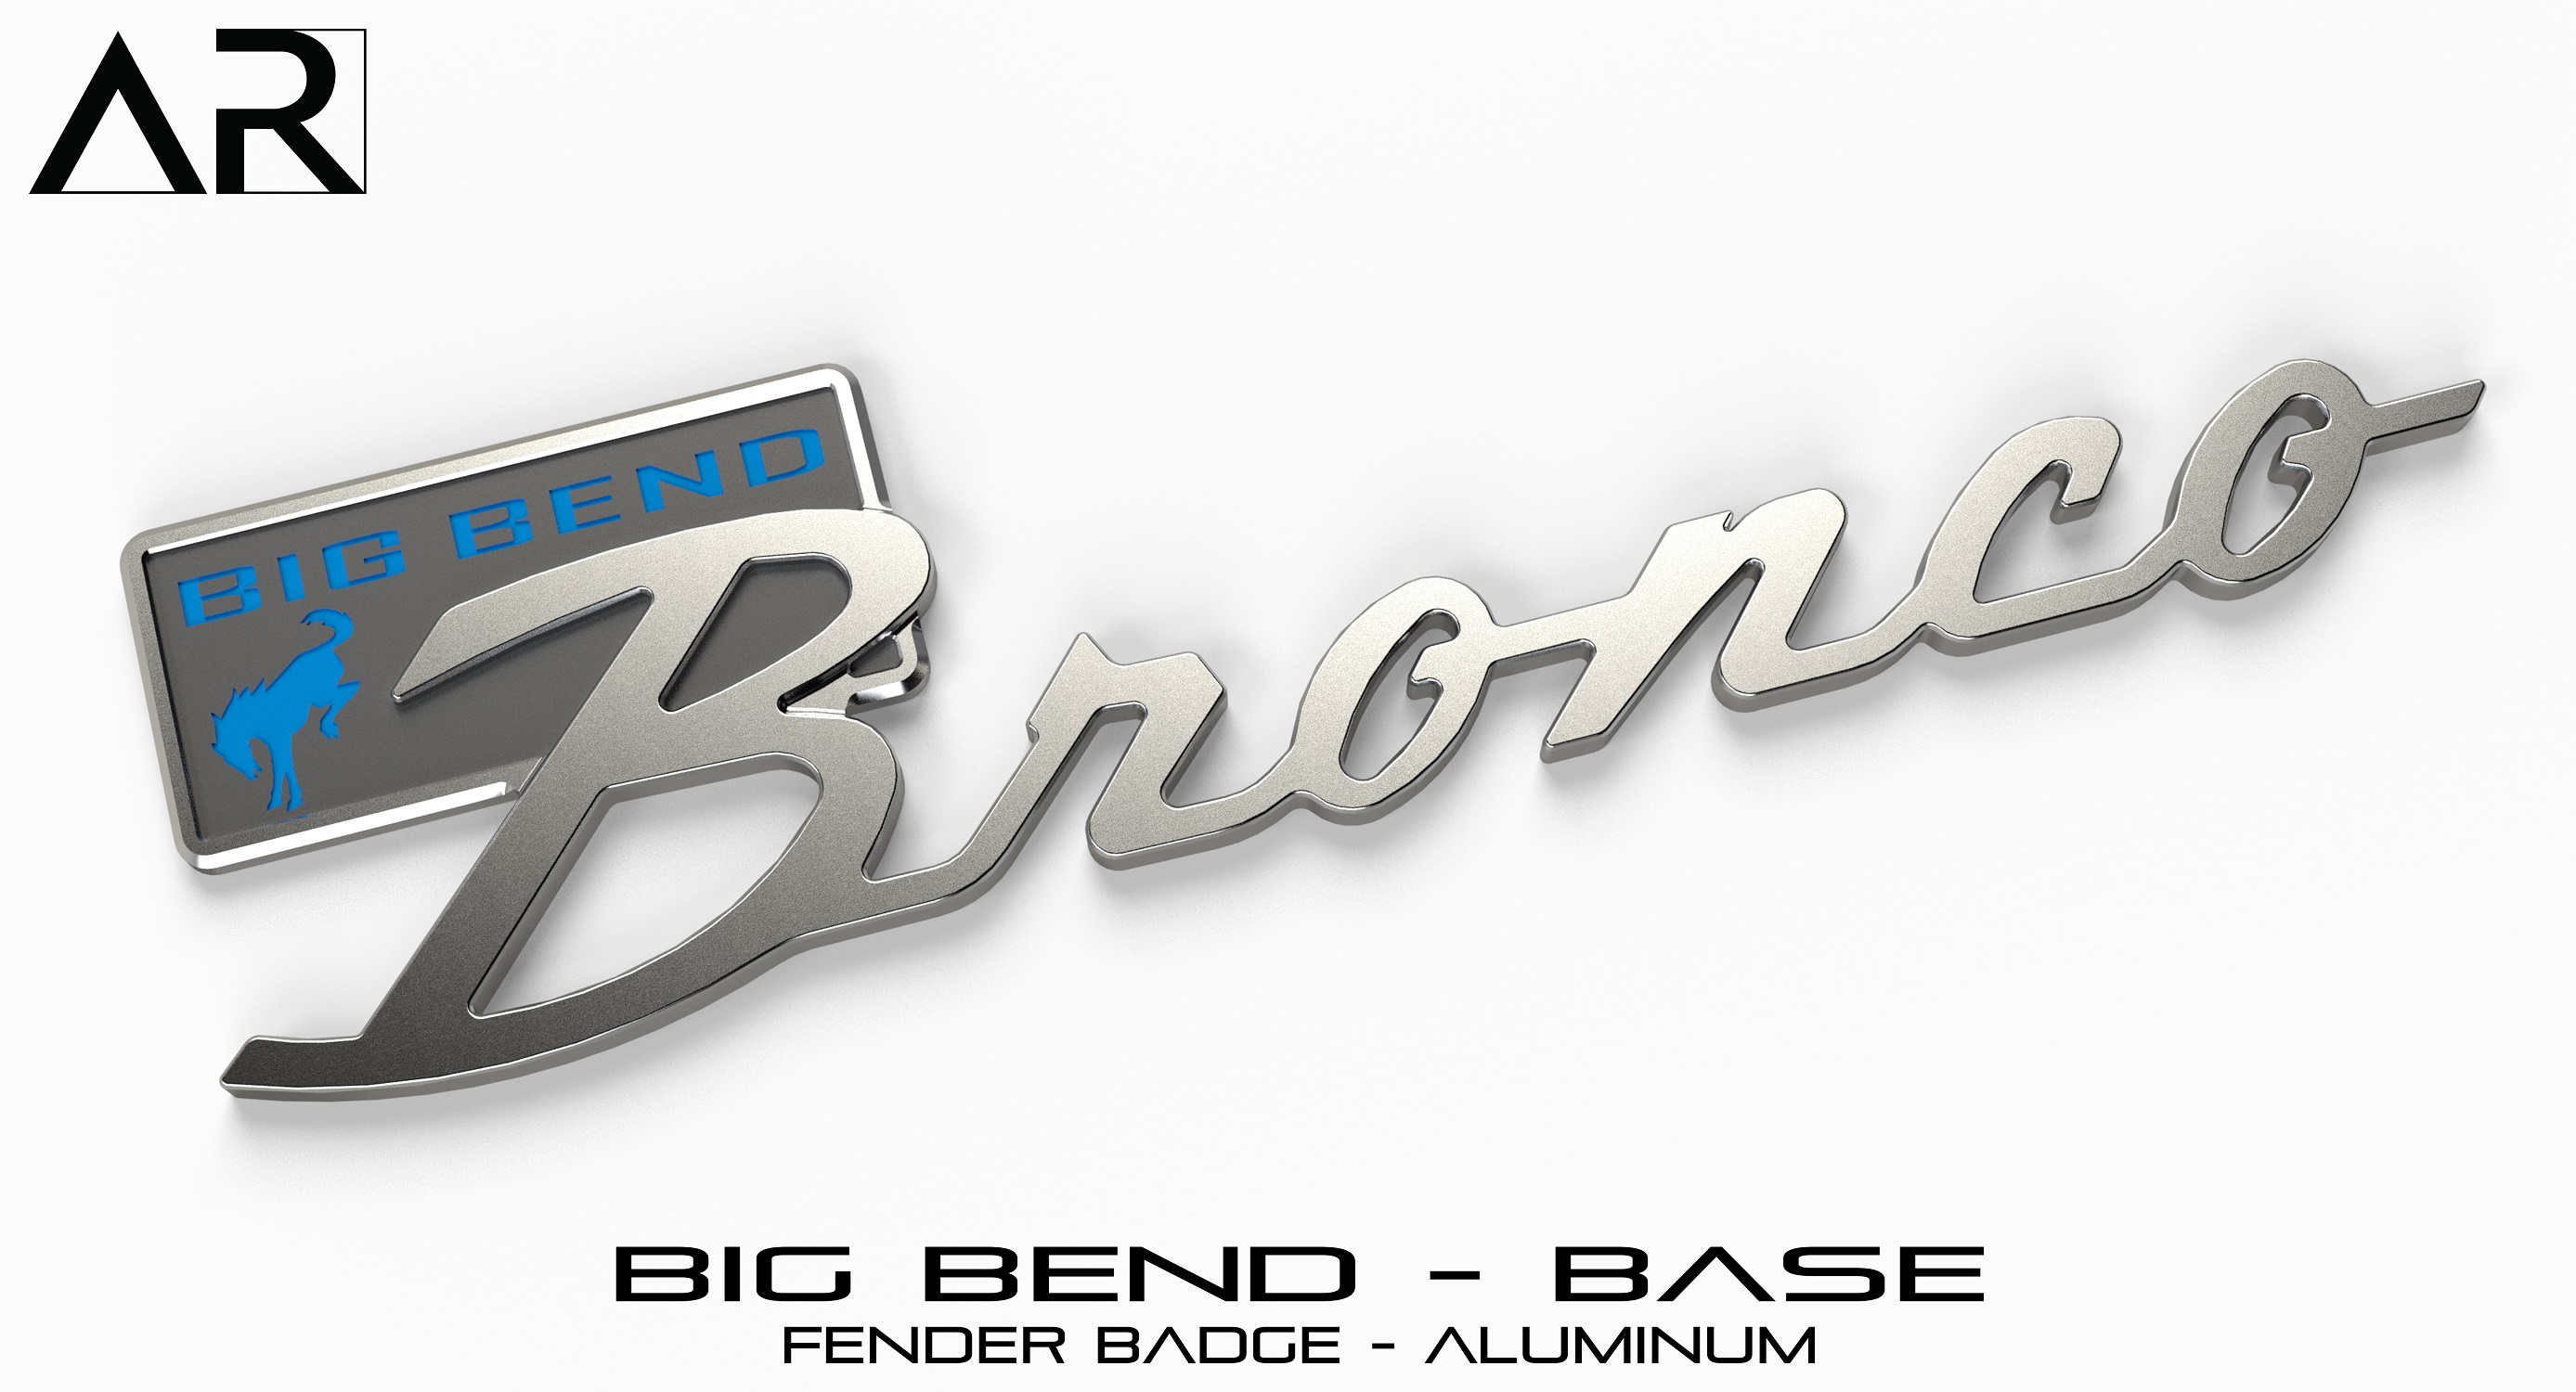 Ford Bronco AR | BRONCO CLASSIC DNA Fender Badge 1601005_B - Fender Badge  - Wildtrak Base 1 - Black